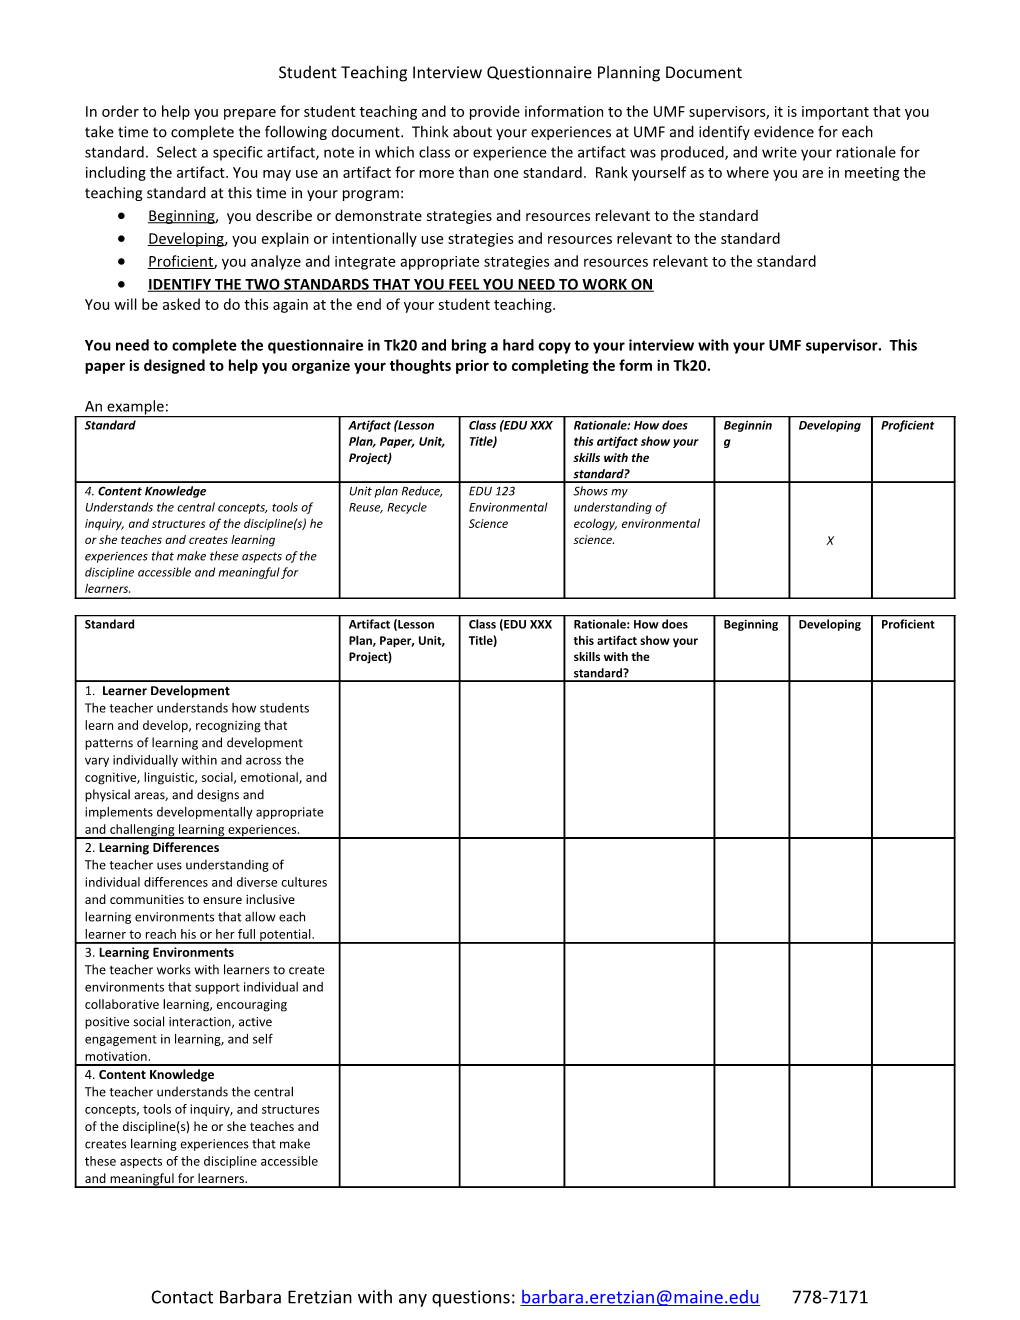 Student Teaching Interview Questionnaireplanning Document